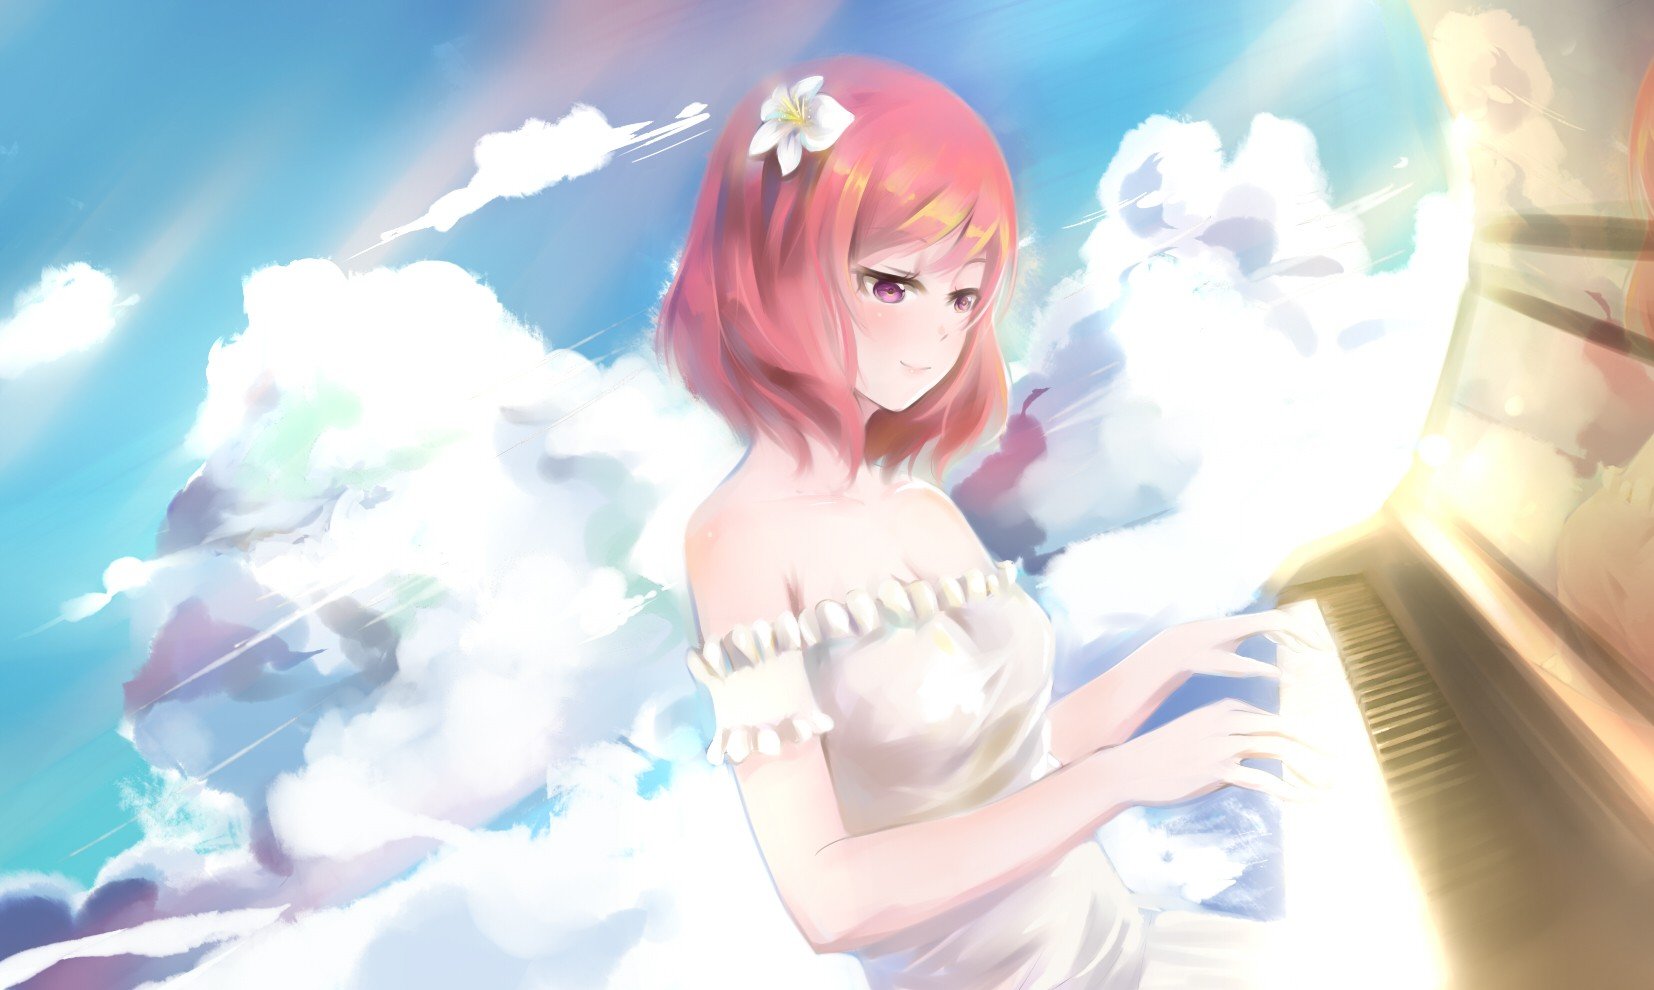 Love Live!, Nishikino Maki, Sky, White dress, Clouds, Flower in hair, Piano, Anime girls, Anime Wallpaper